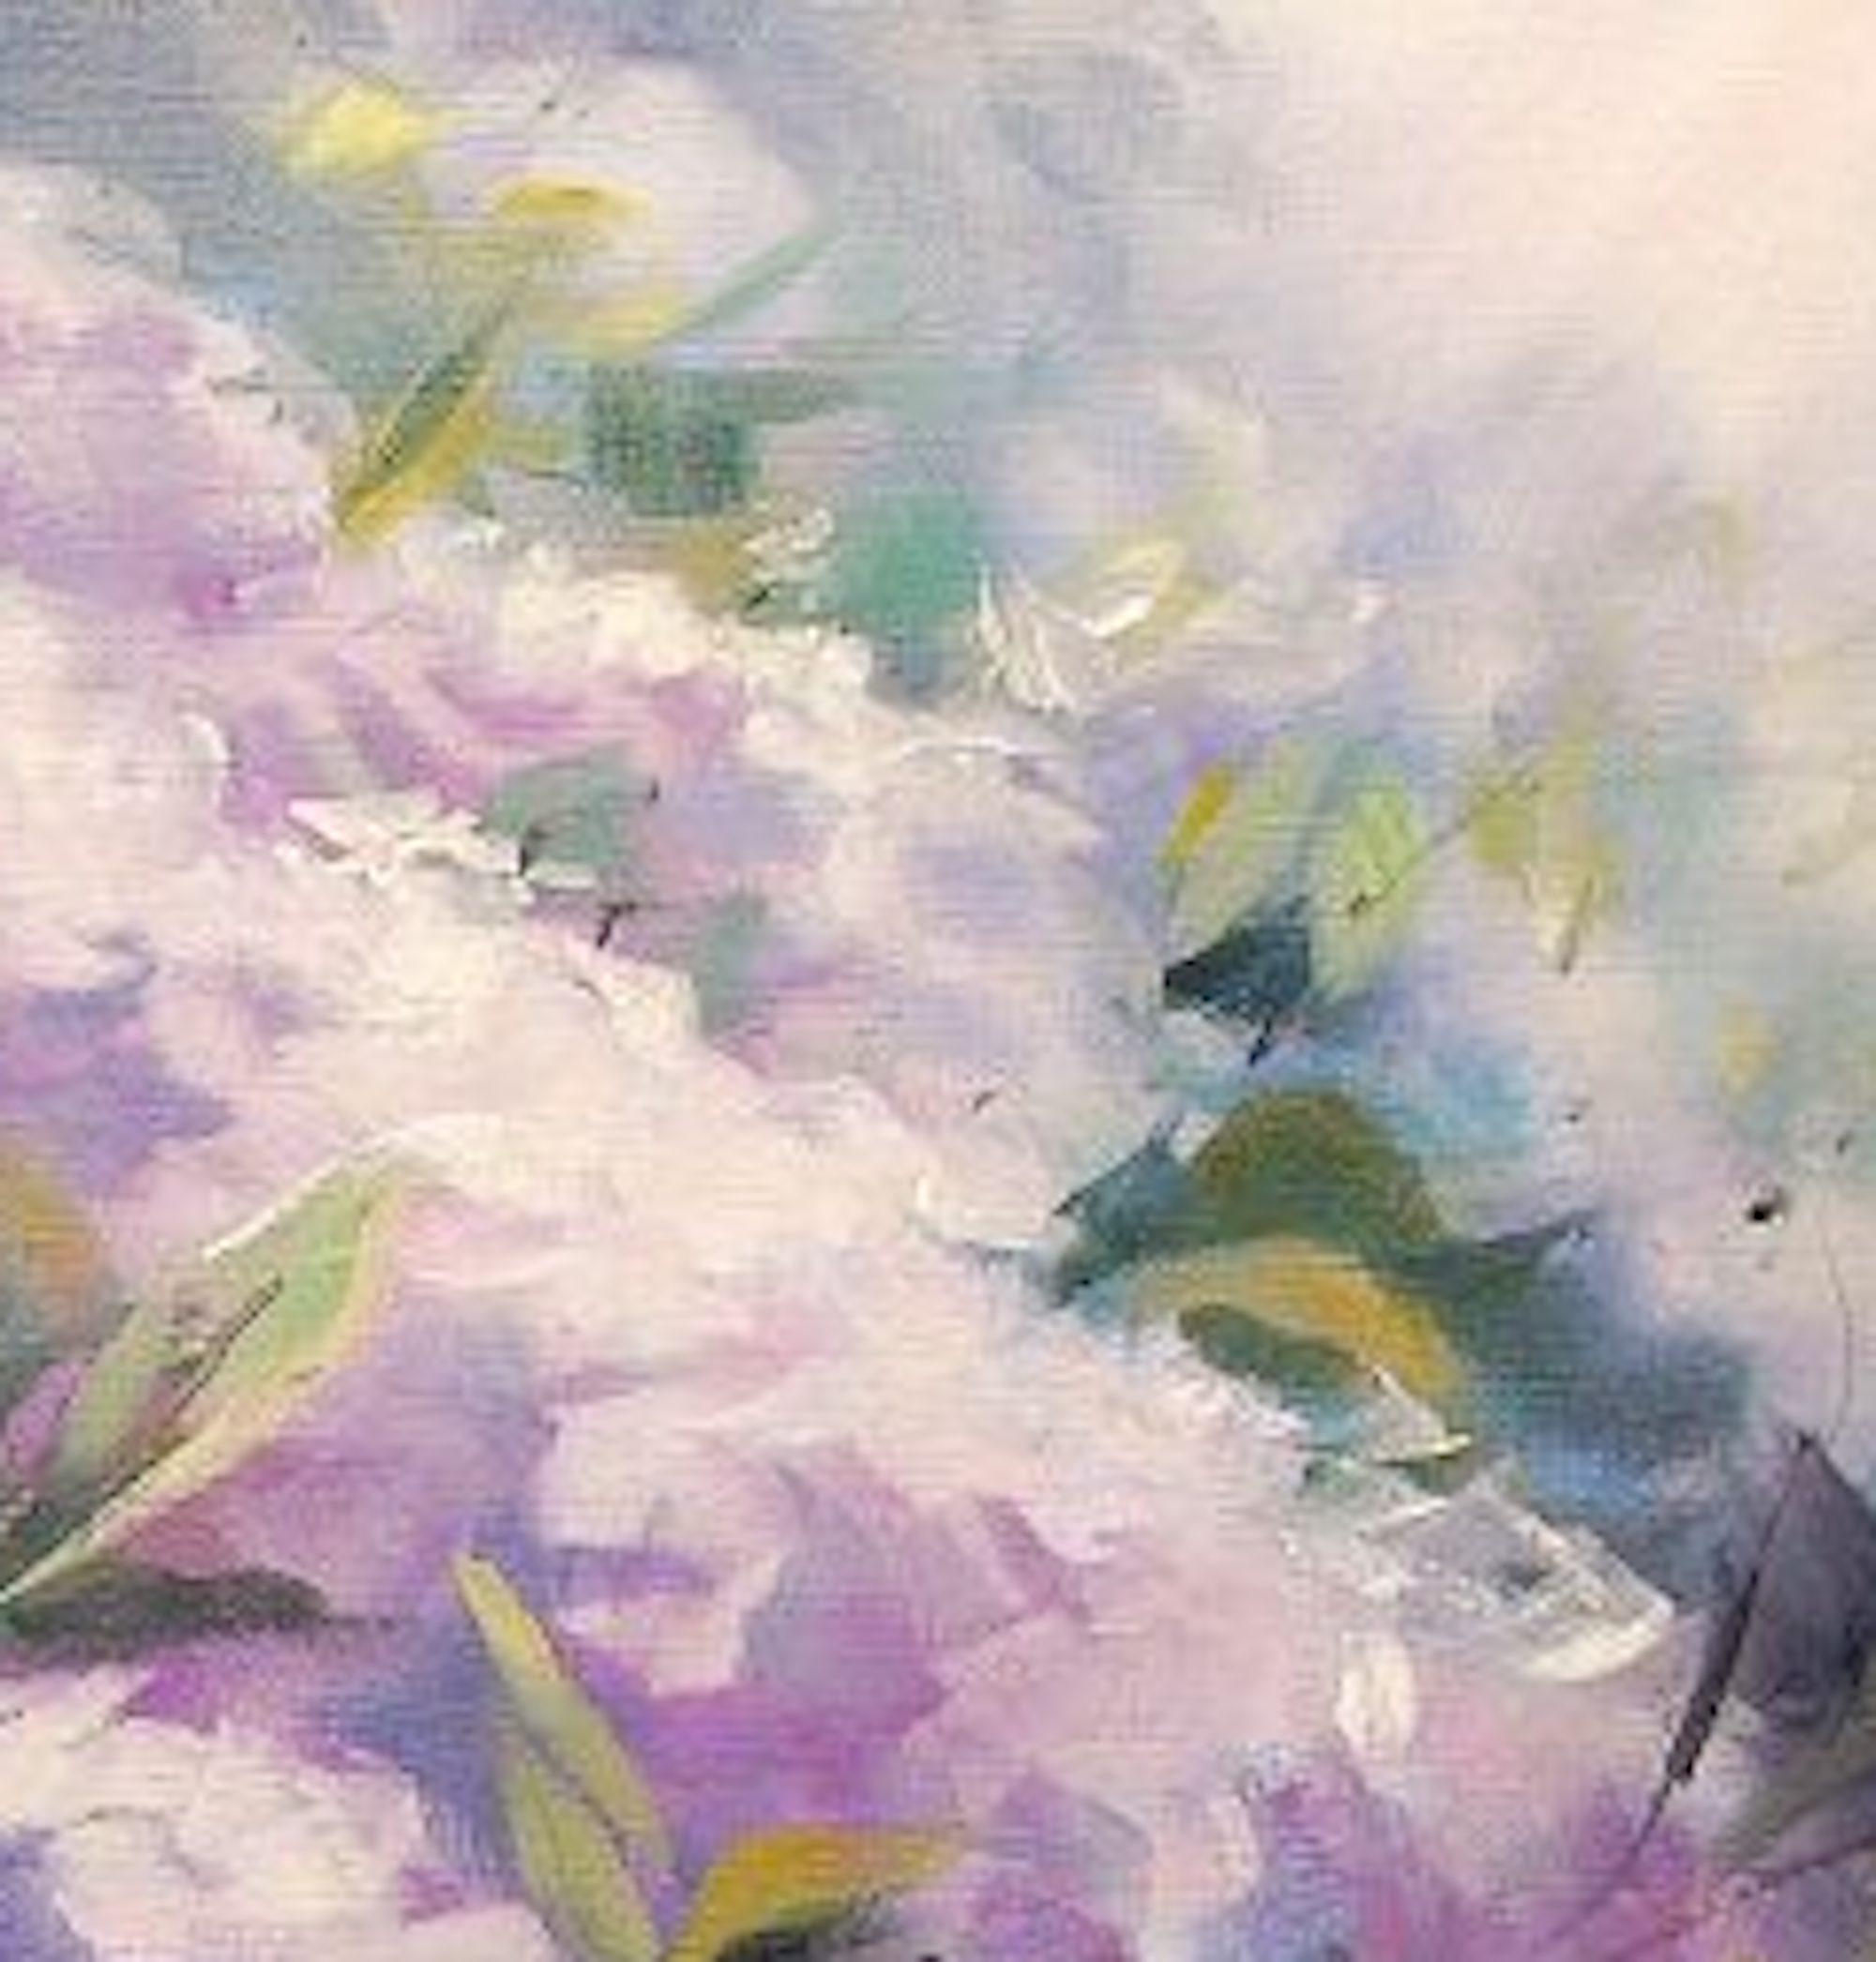 Hydrangeas in Sunlight, floral art, original art, affordable art - Contemporary Painting by Trevor Waugh